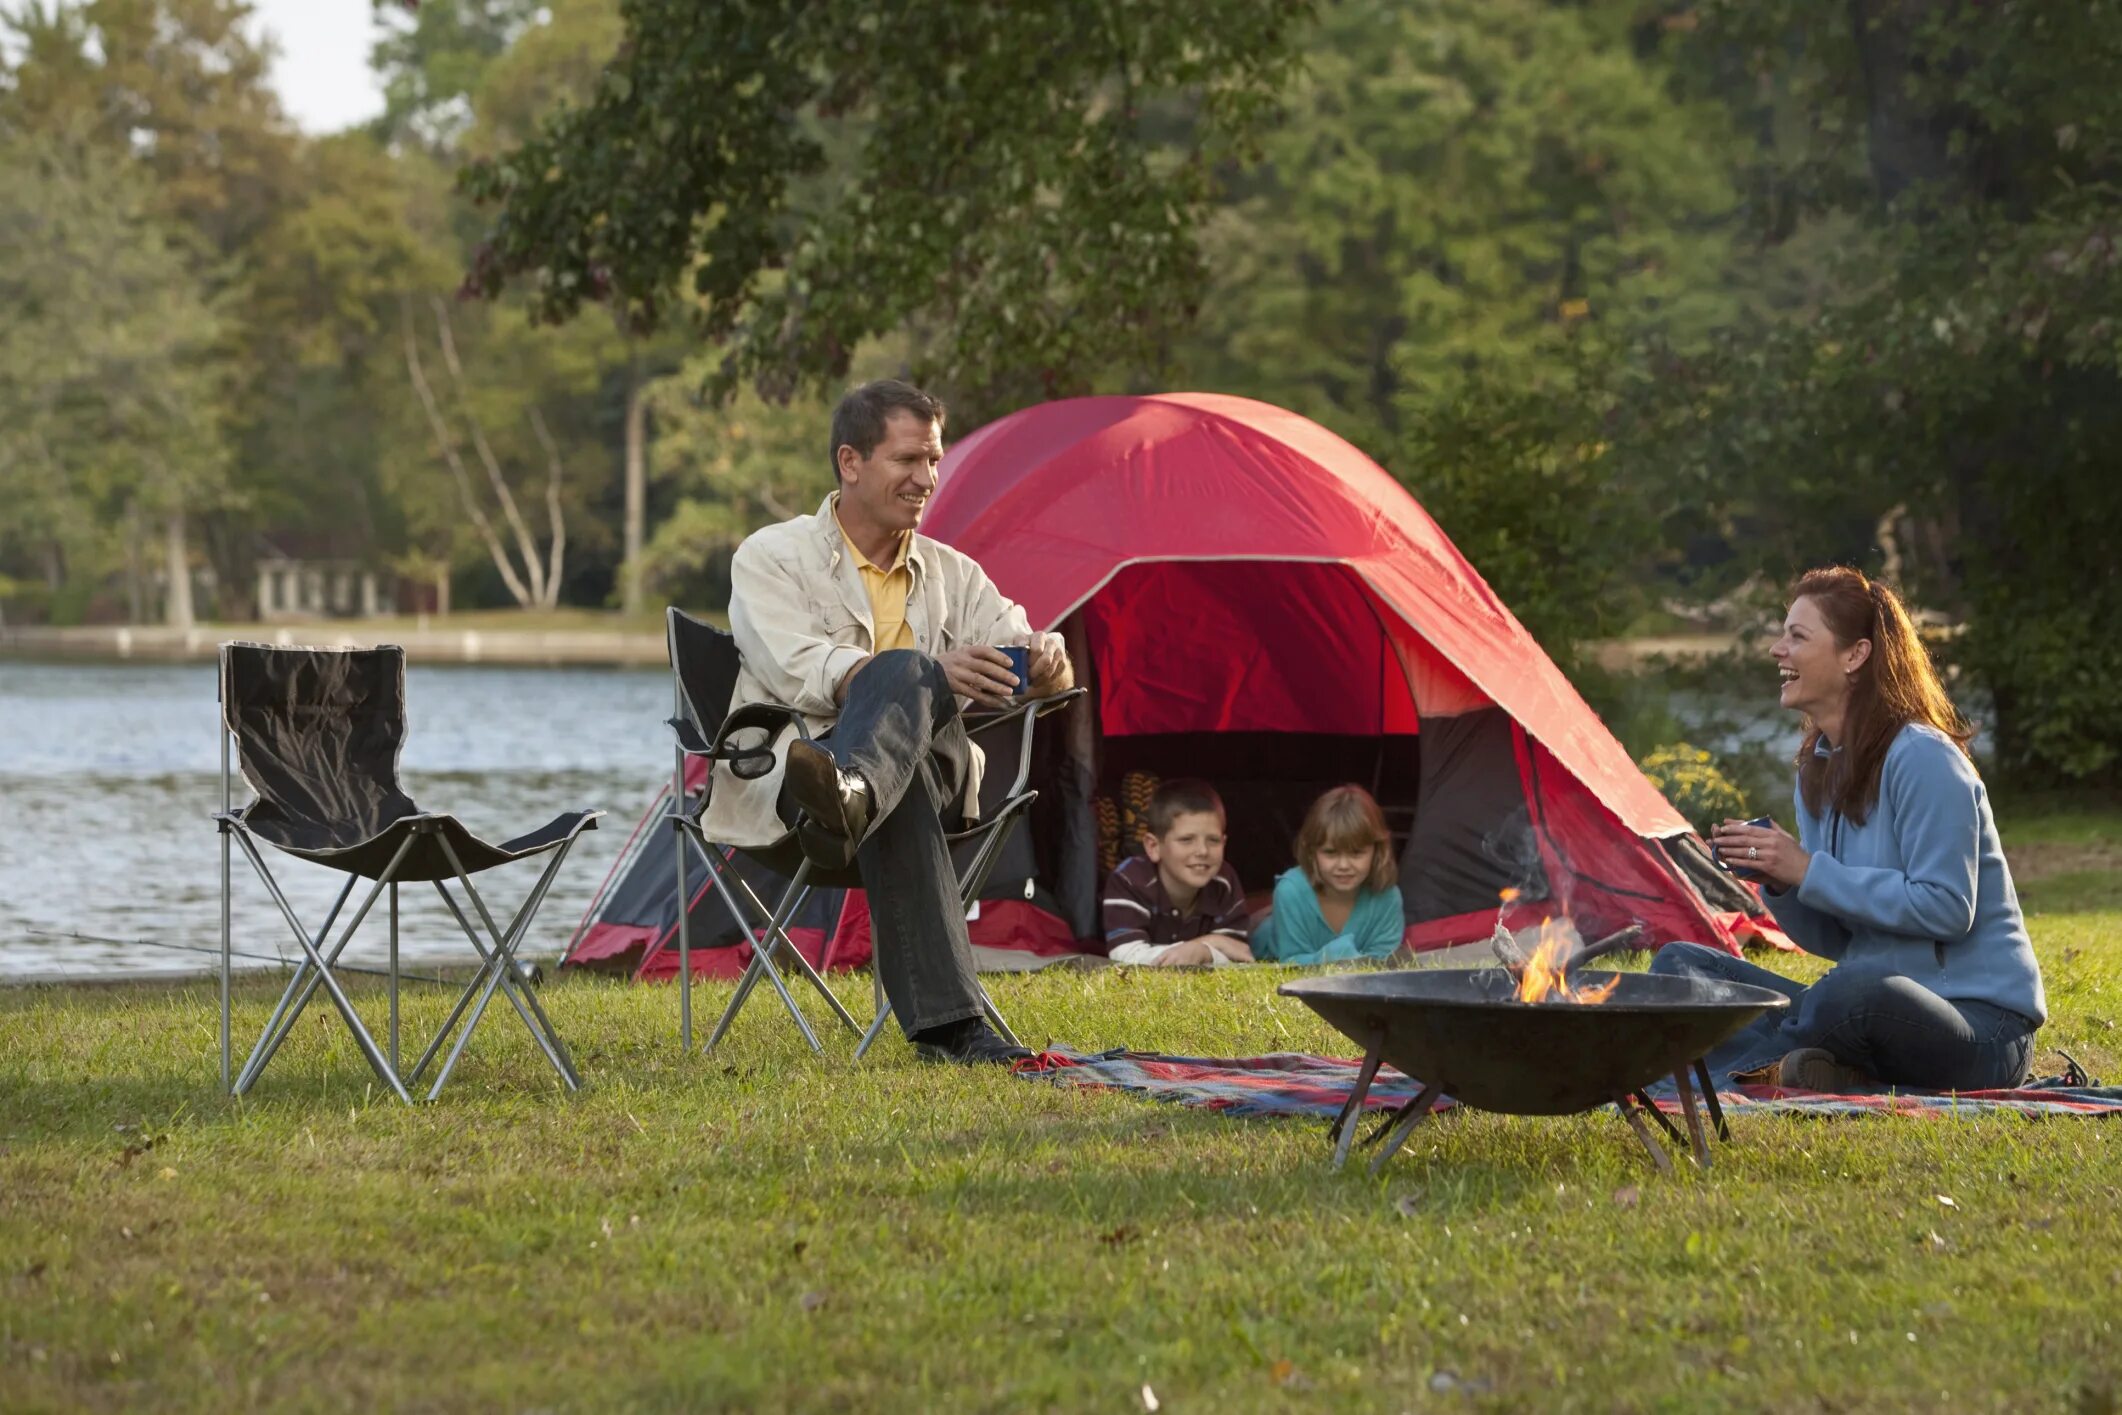 Палатка на природе. Отдыхаем на природе. Пикник с семьей на природе. Пикник на природе с палатками. Camping music